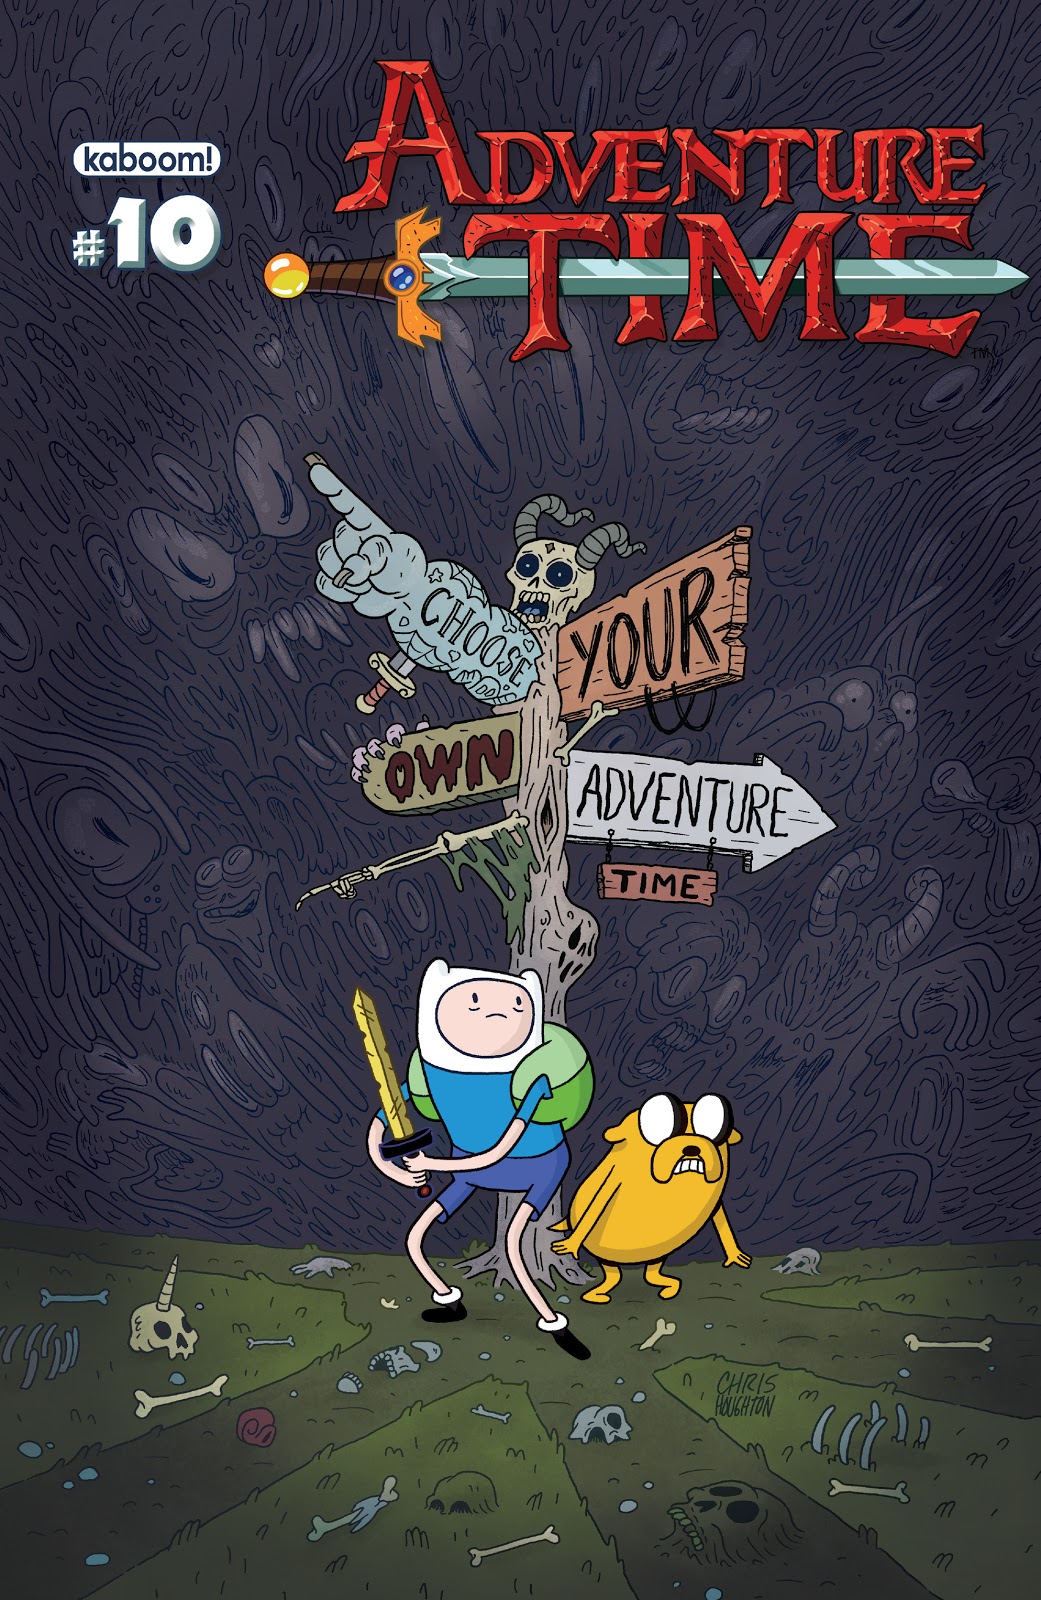 DVD Adventure Time: Hora De Aventura Com Finn & Jake - Volume 2 em